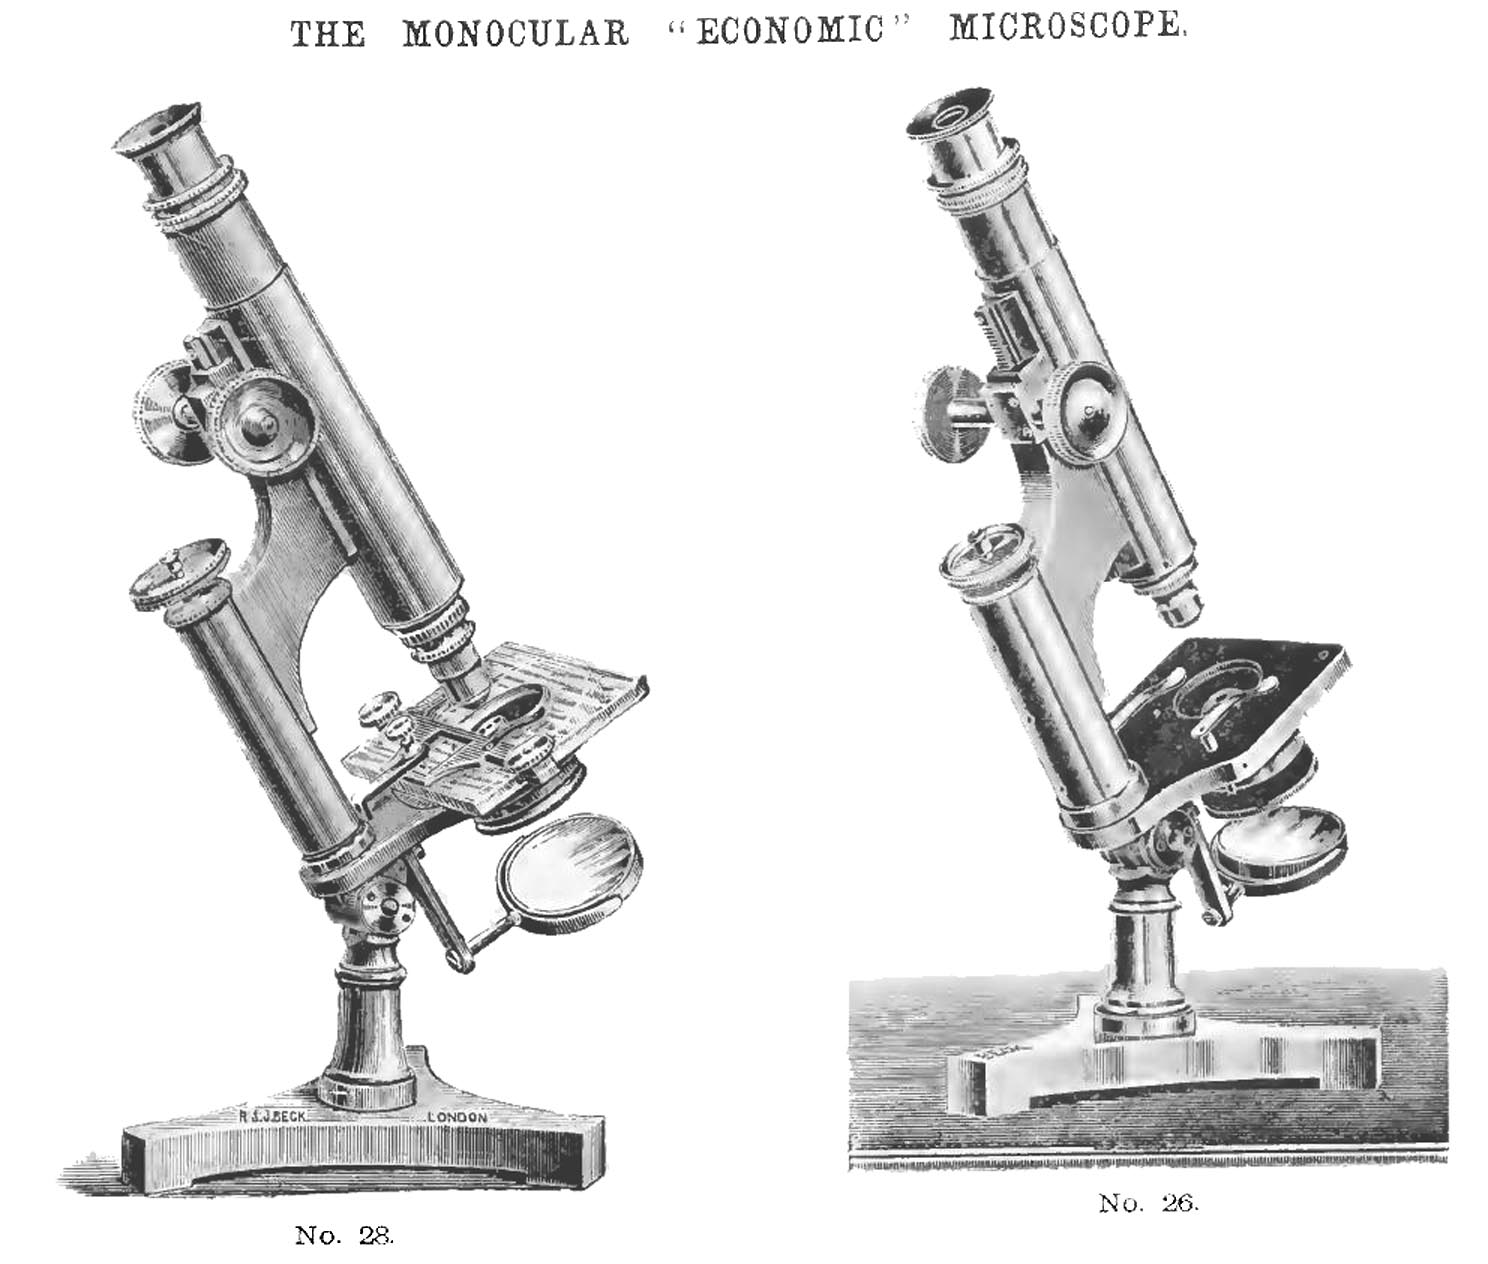 Beck Economic Microscope Engravings